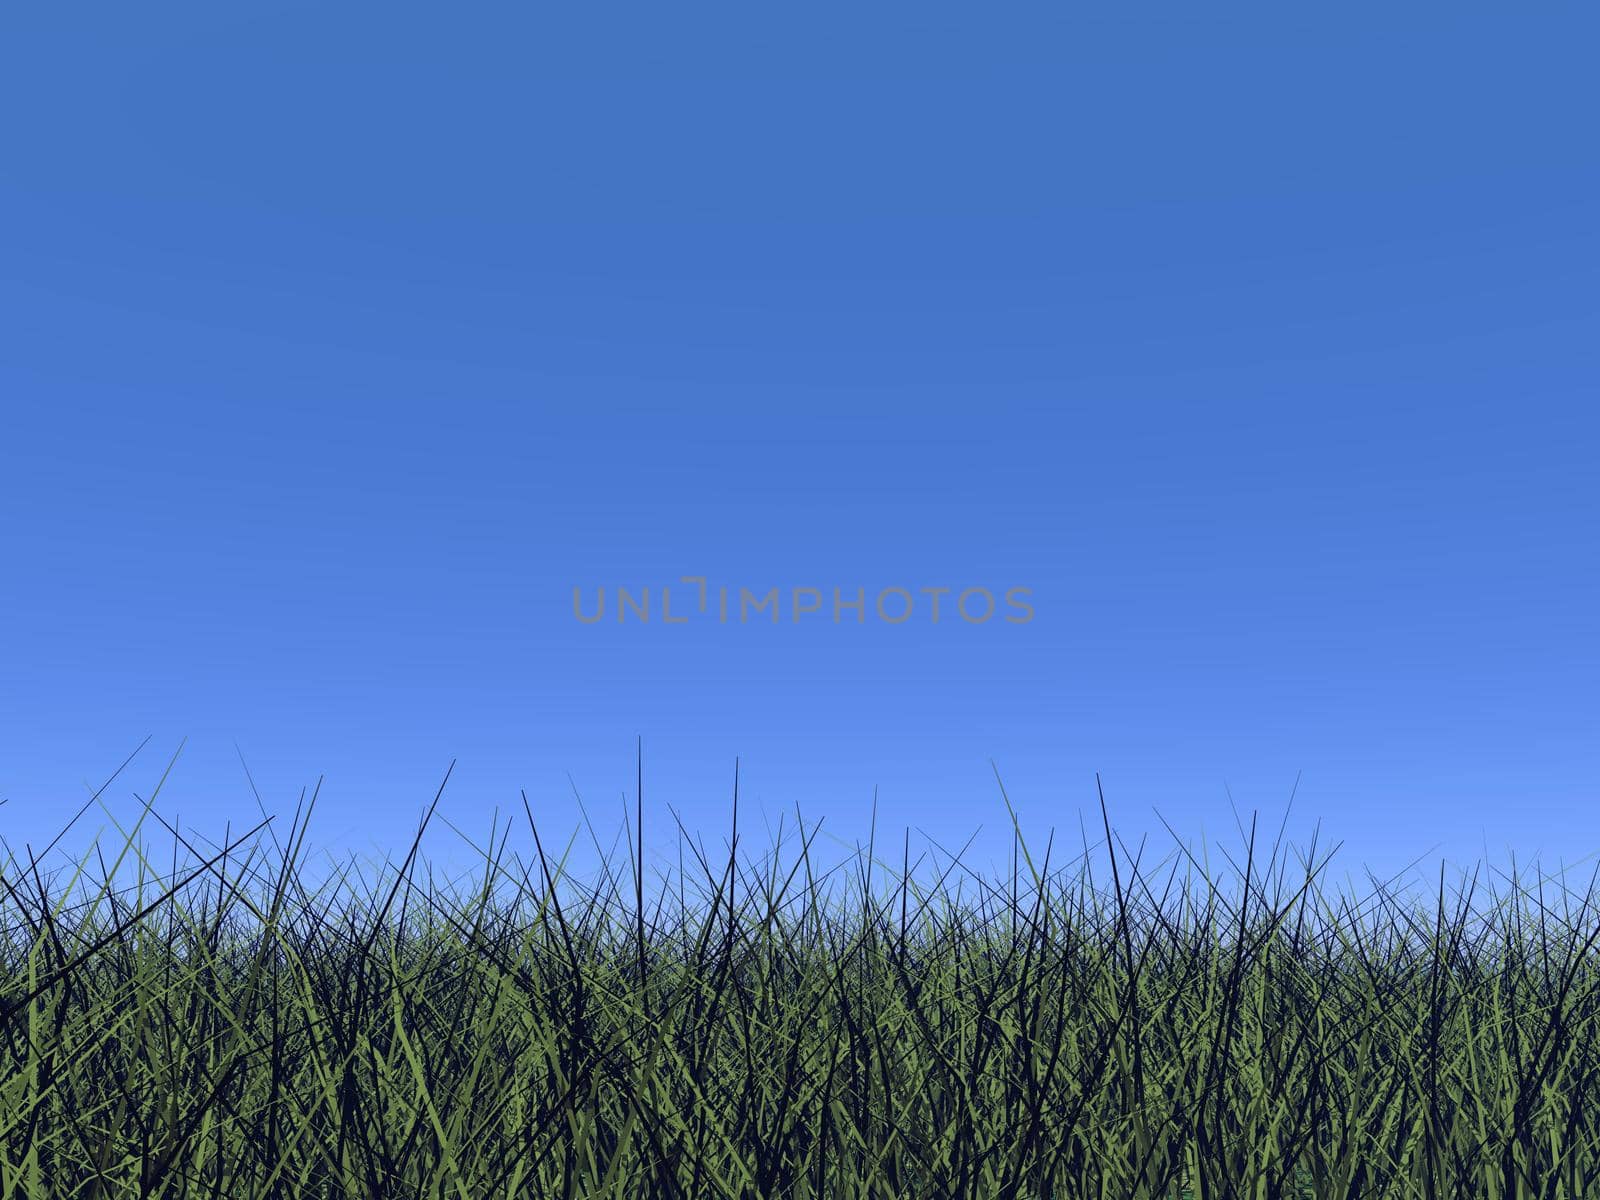 Grass and blue sky - 3D render by Elenaphotos21